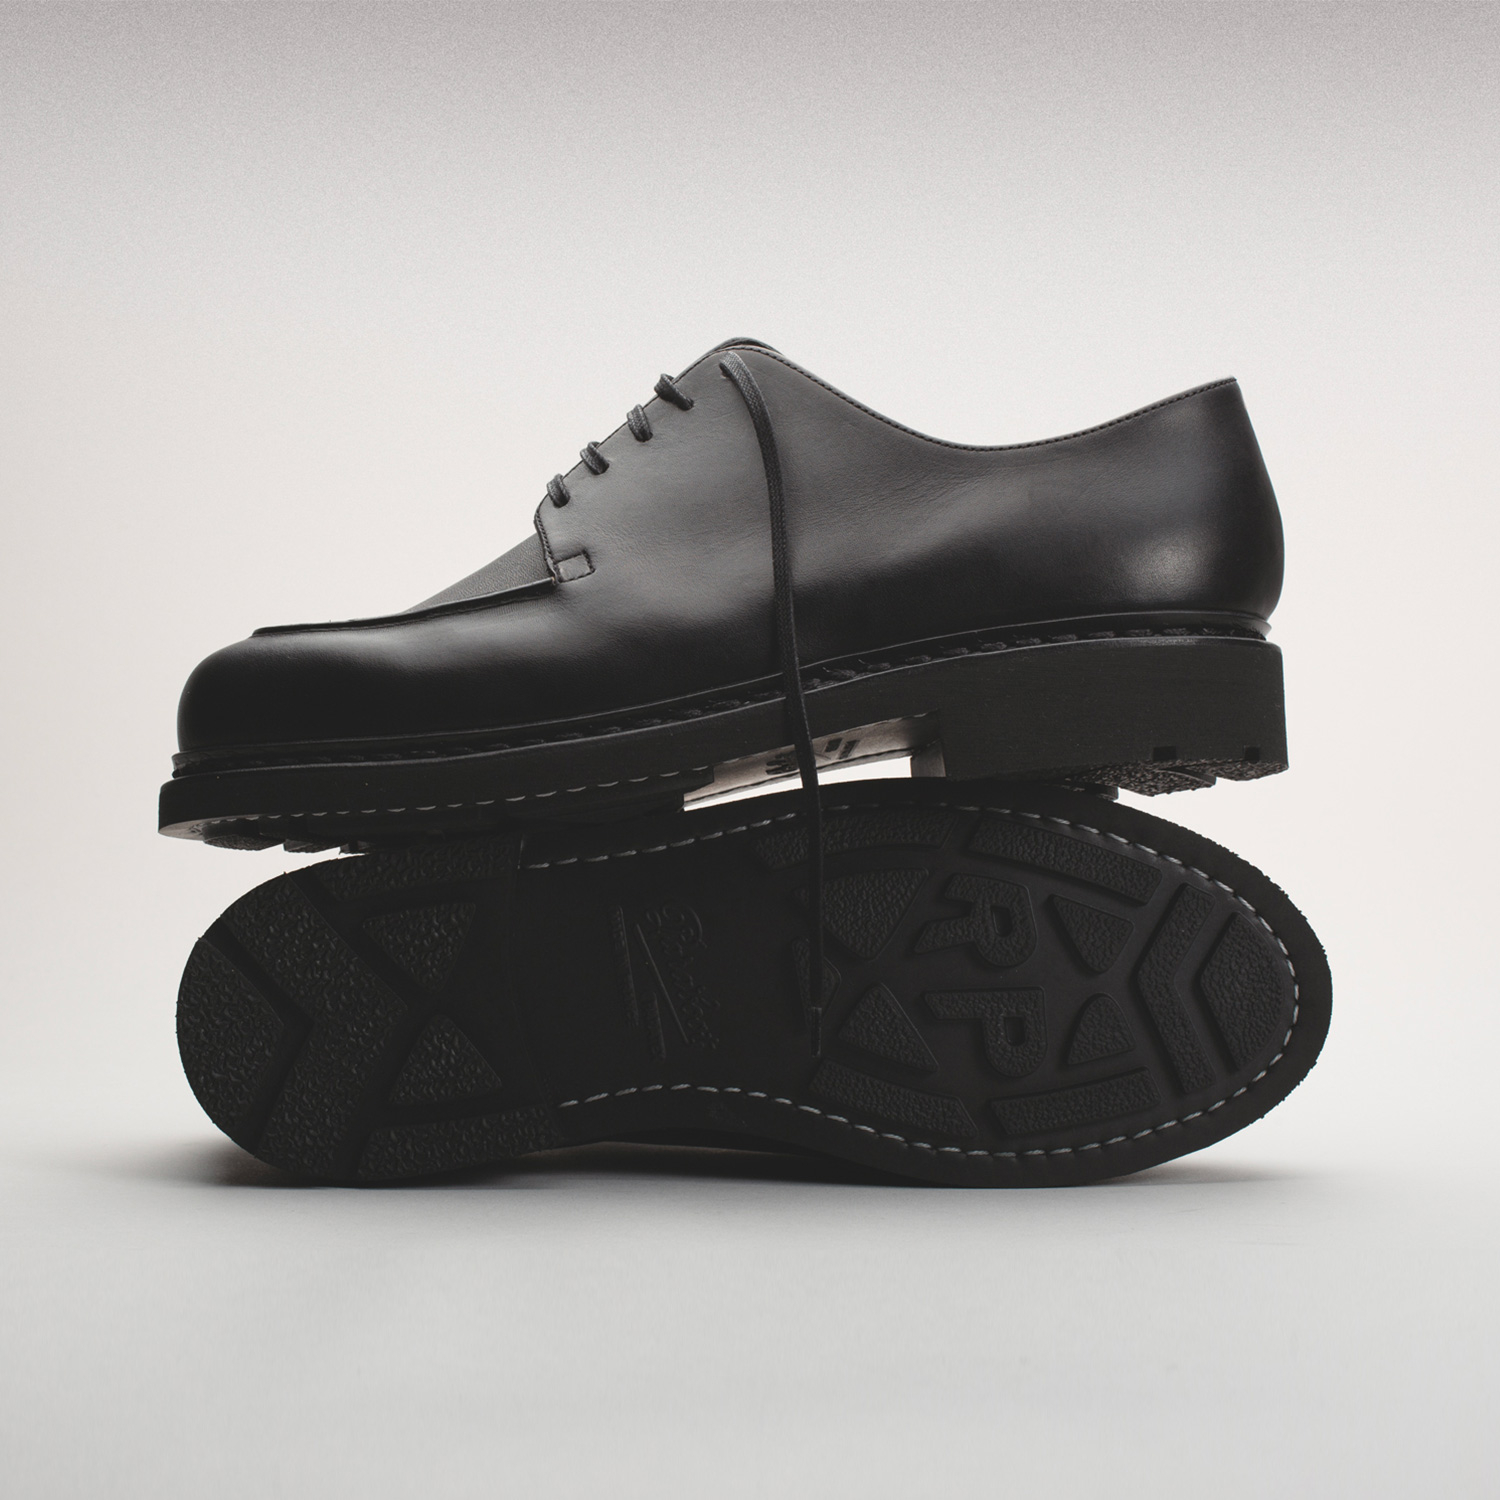 MIRAGE shoes in Black color by Arpenteur